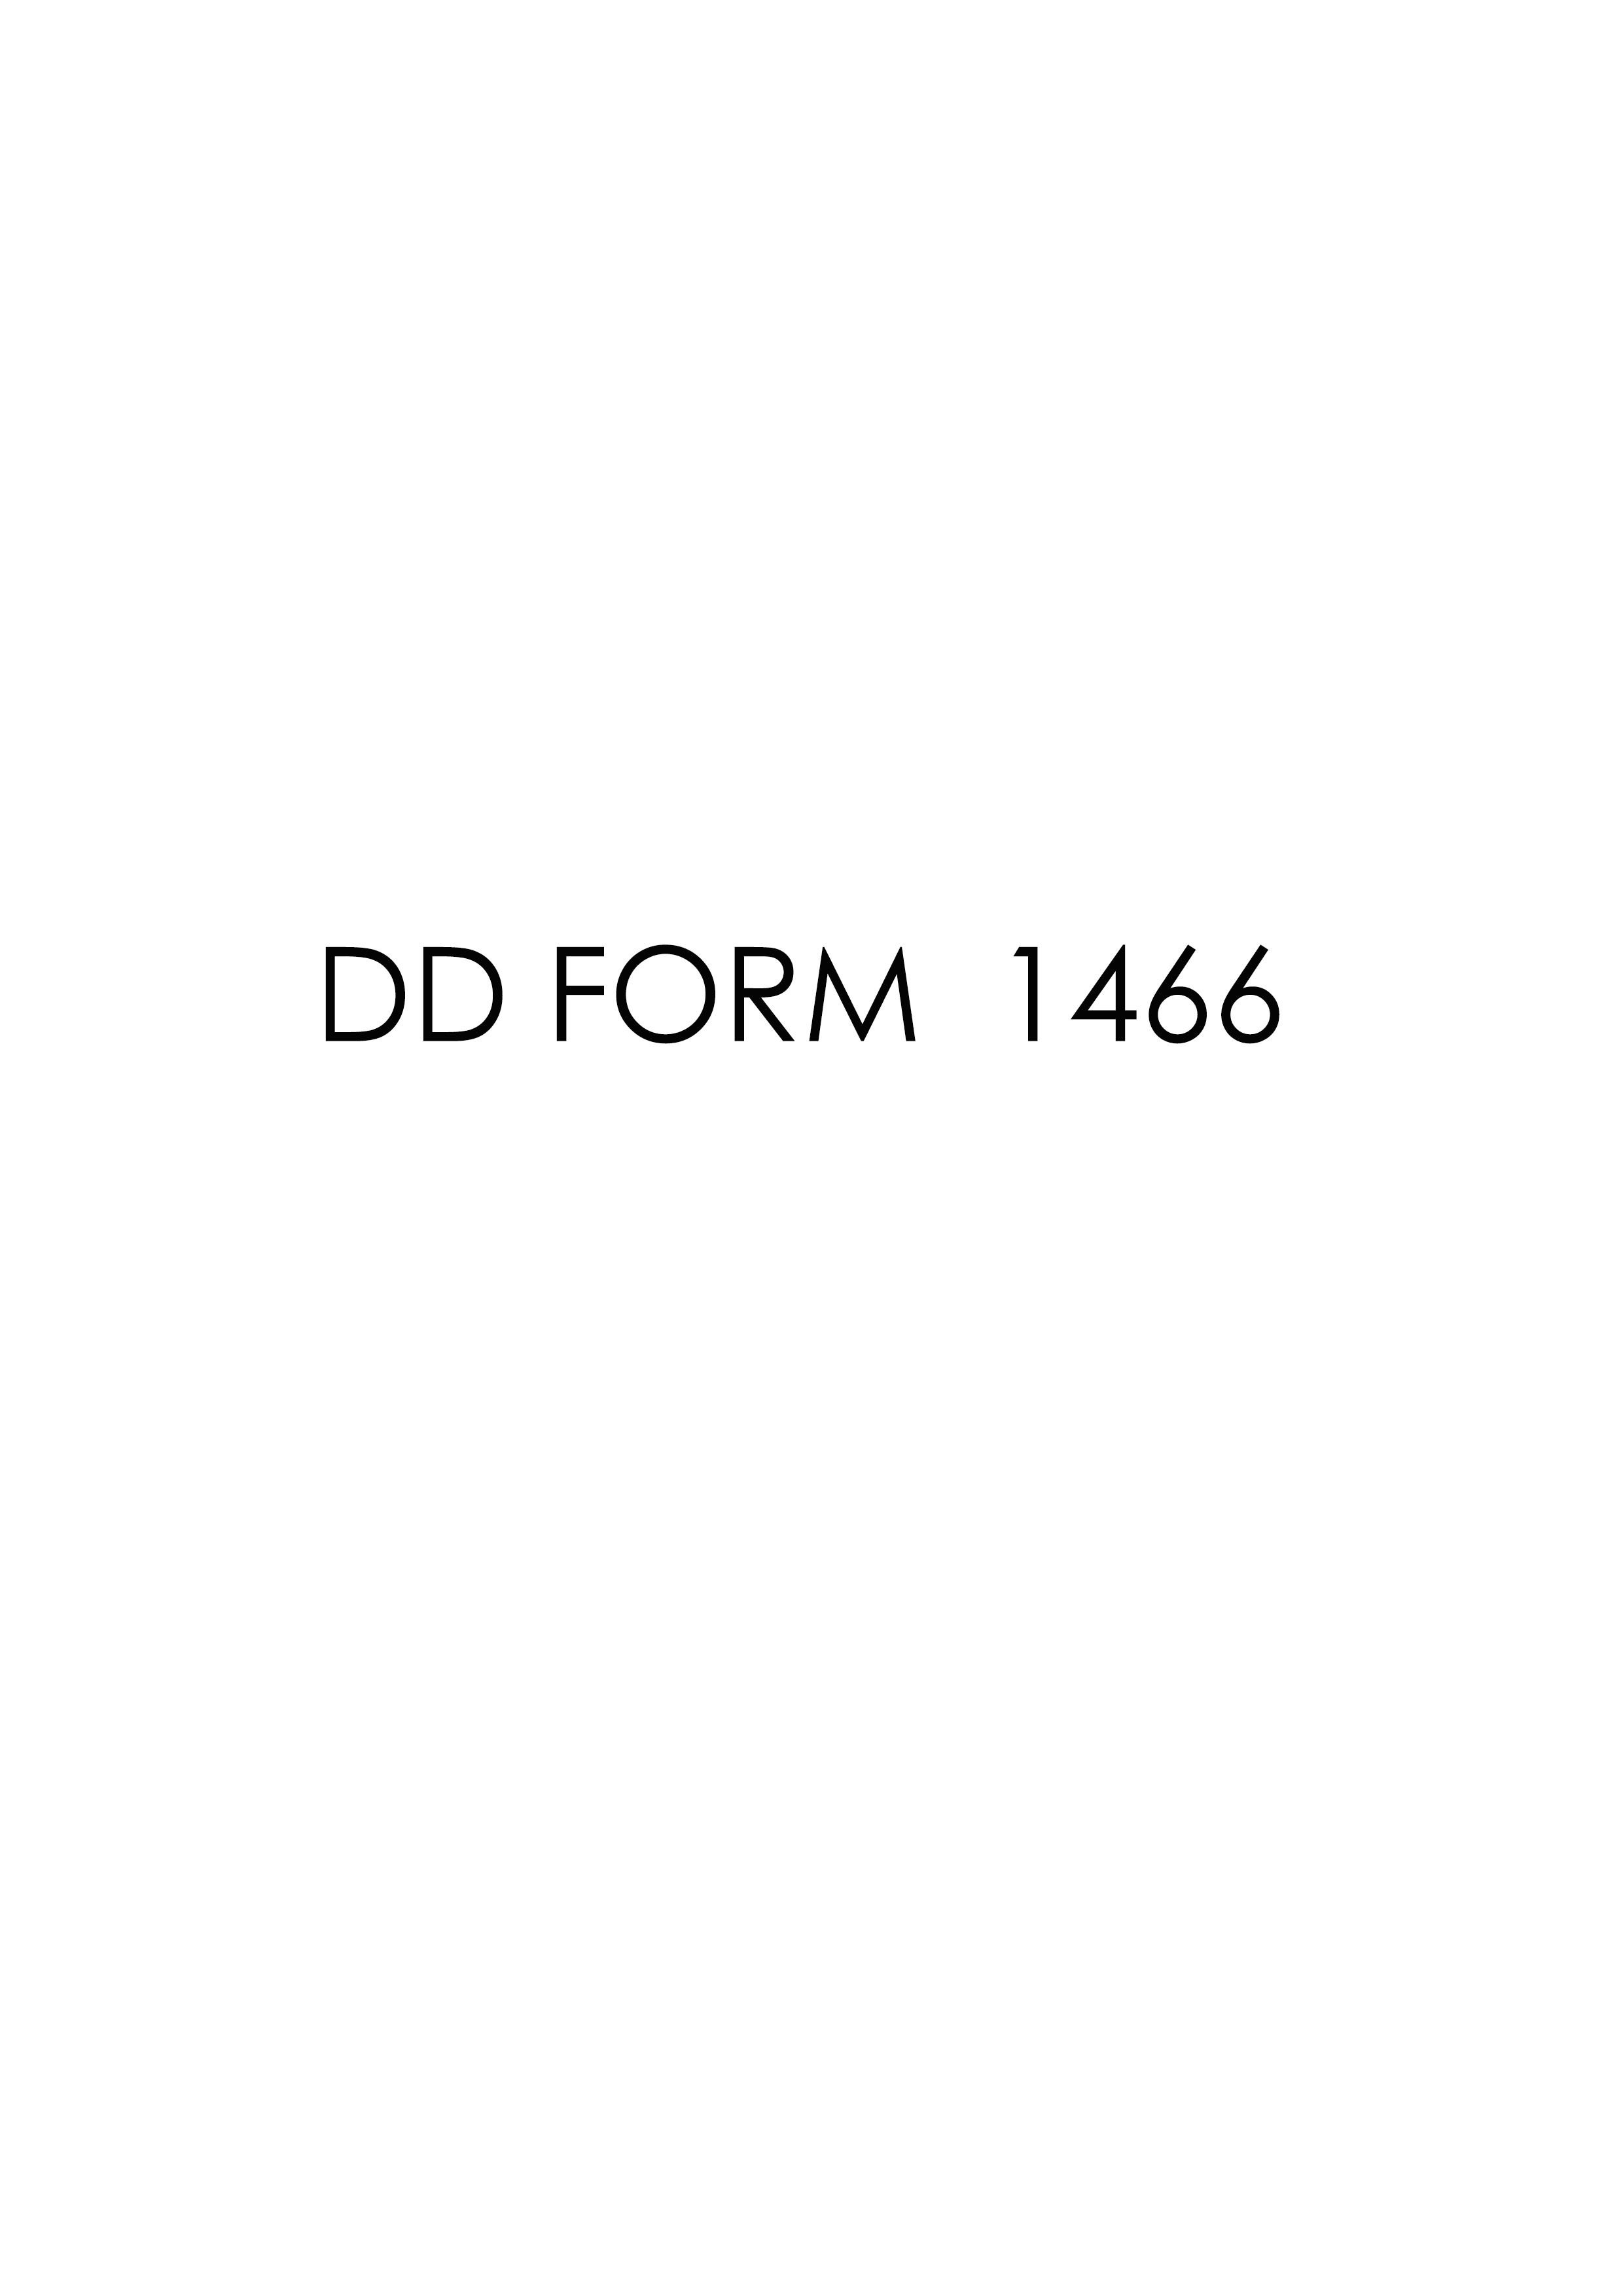 Download dd 1466 Form